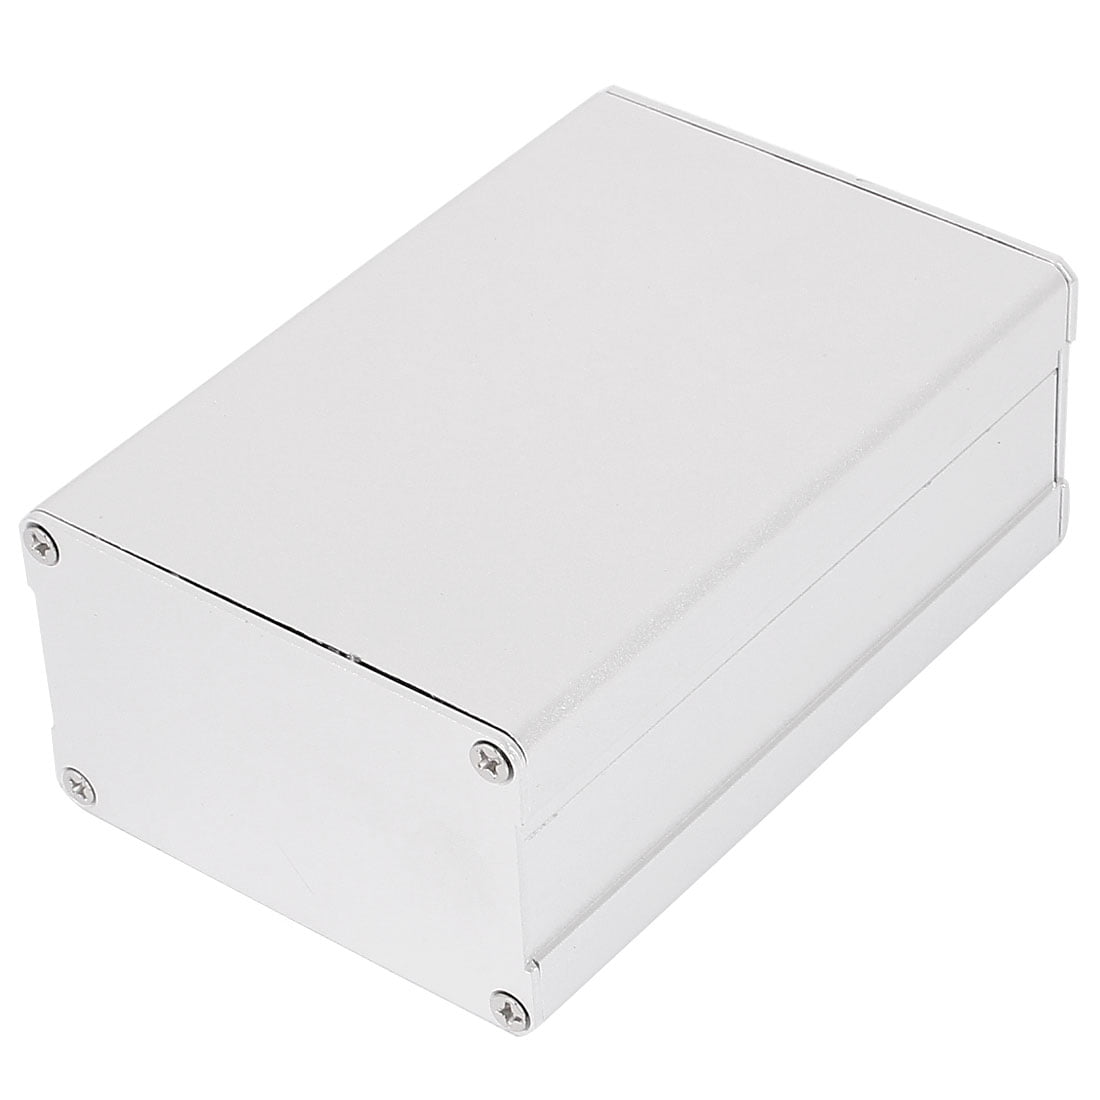 Panel Mount Aluminum Project Box Enclosure Case Electronic Power DIY 110x76x46mm 